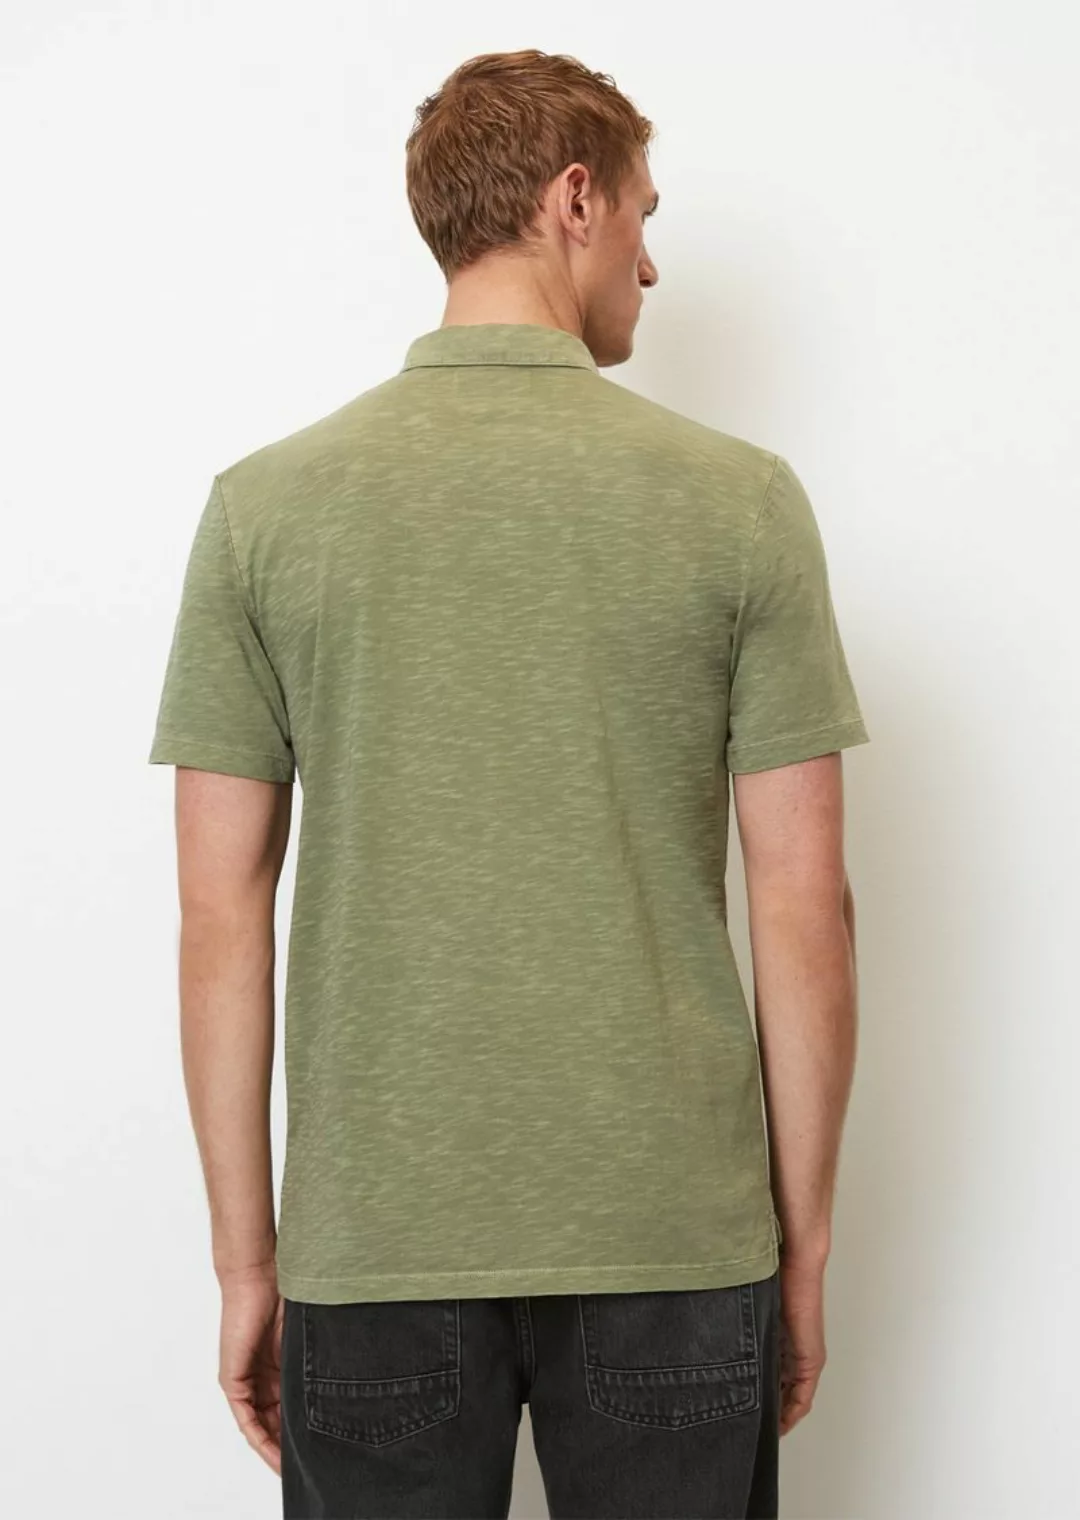 Marc O'Polo Polohemd Melange Oliv Grün - Größe XXL günstig online kaufen